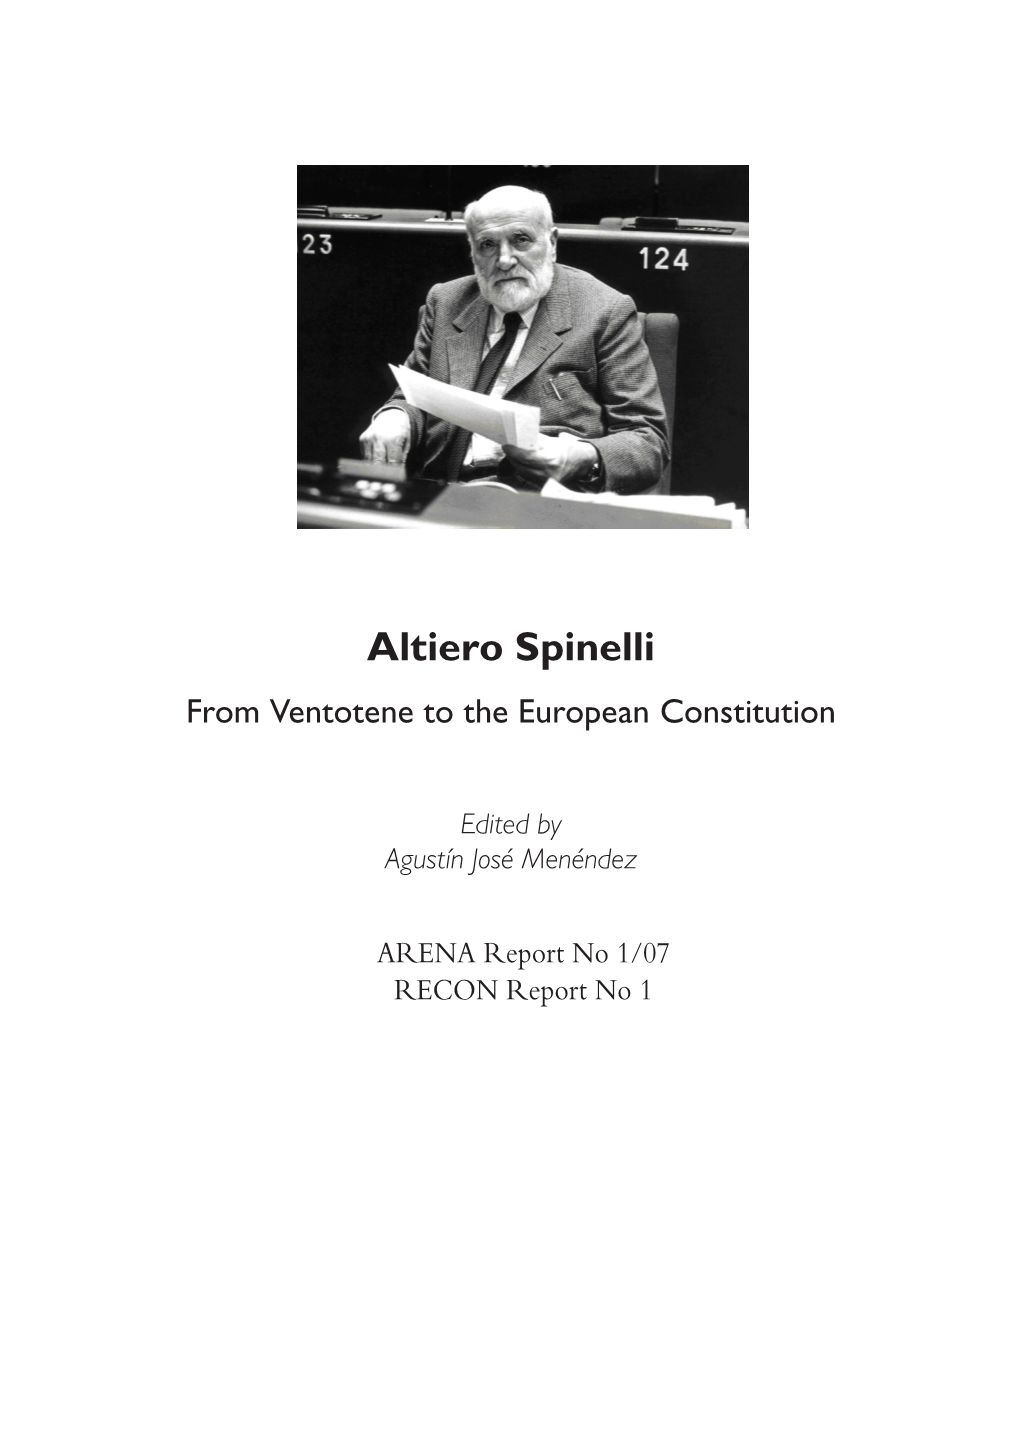 Altiero Spinelli from Ventotene to the European Constitution